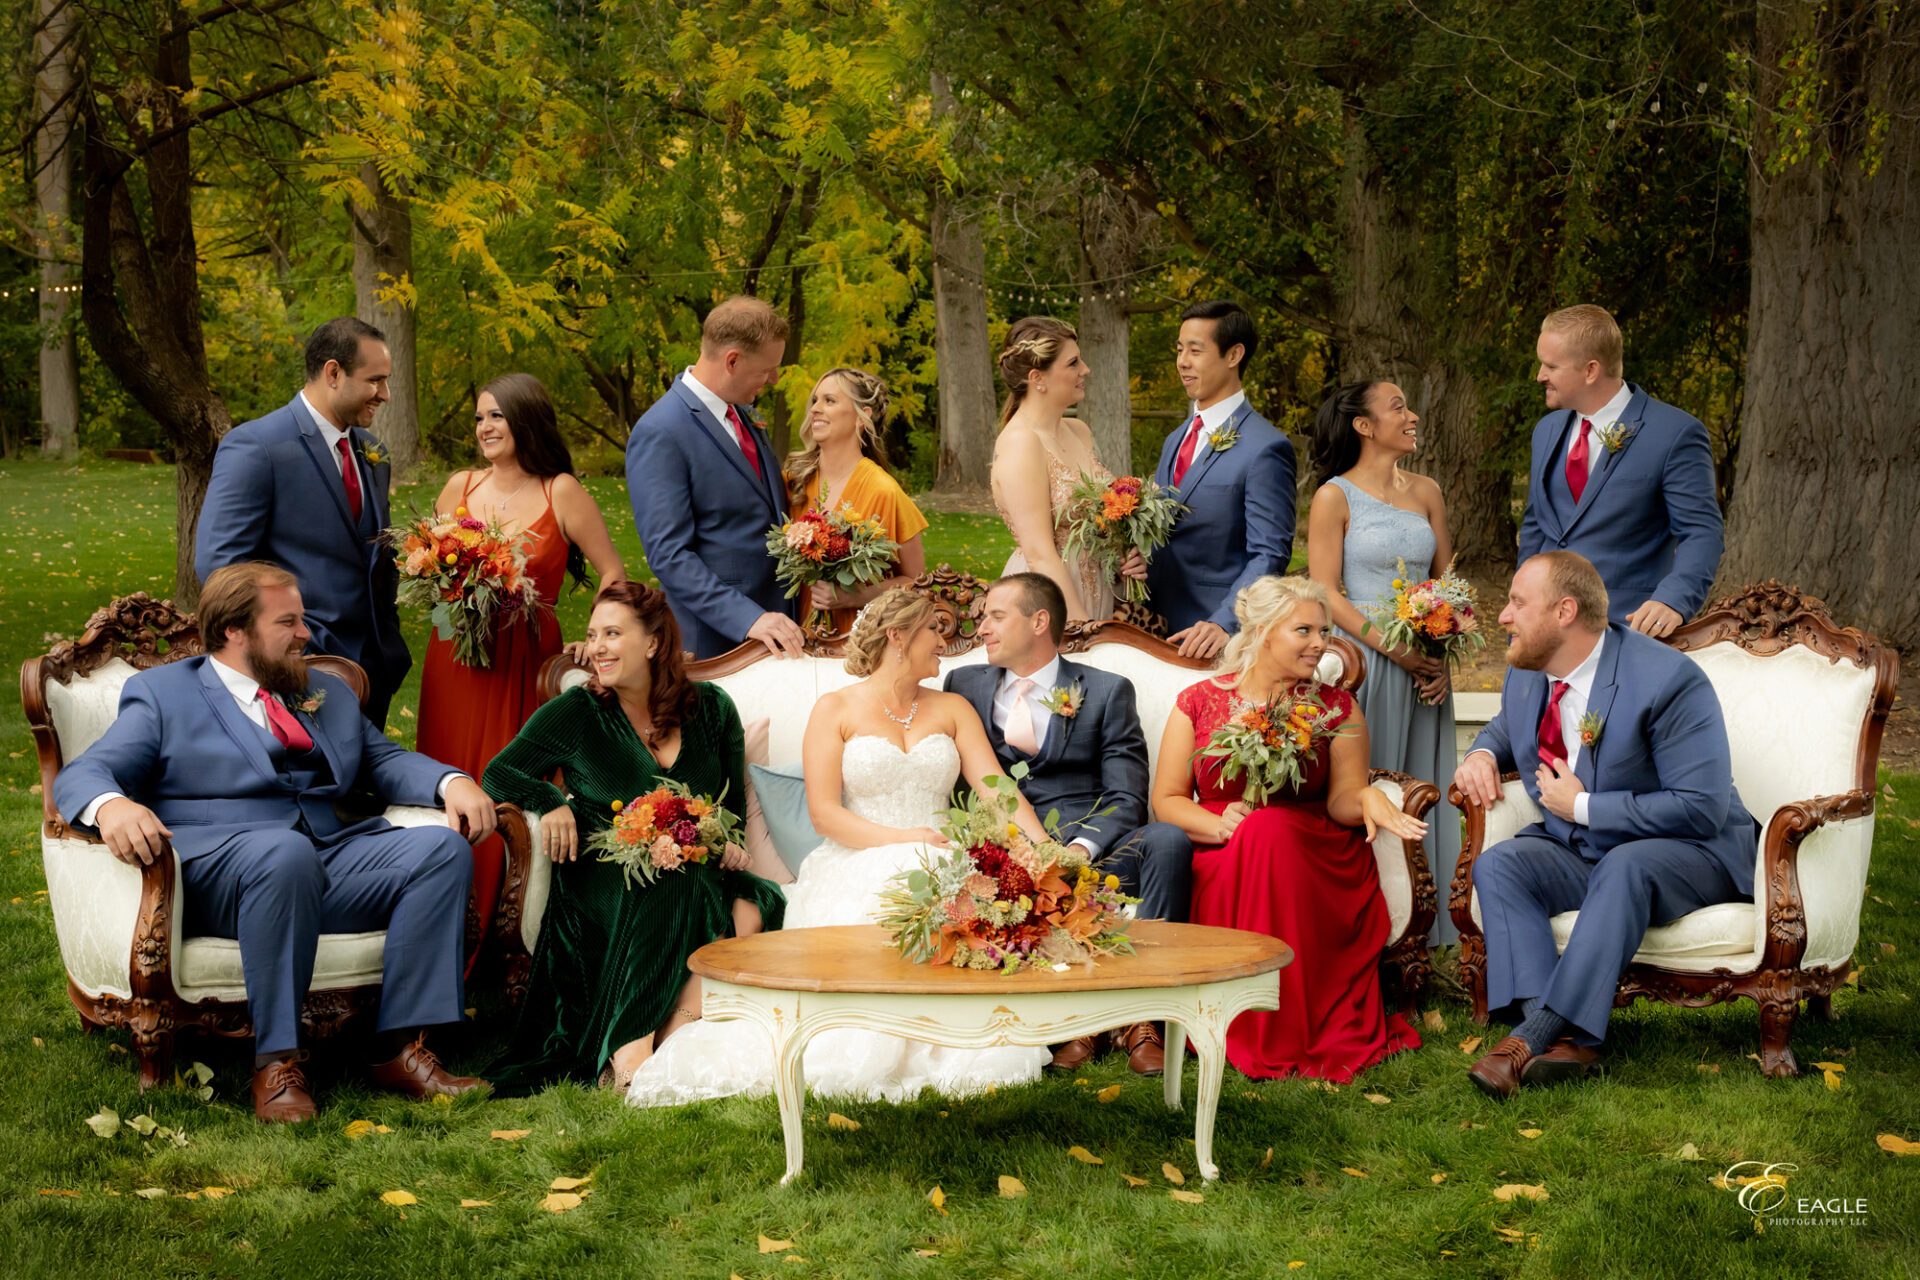 The bride, groom, bridesmaids, and groomsmen